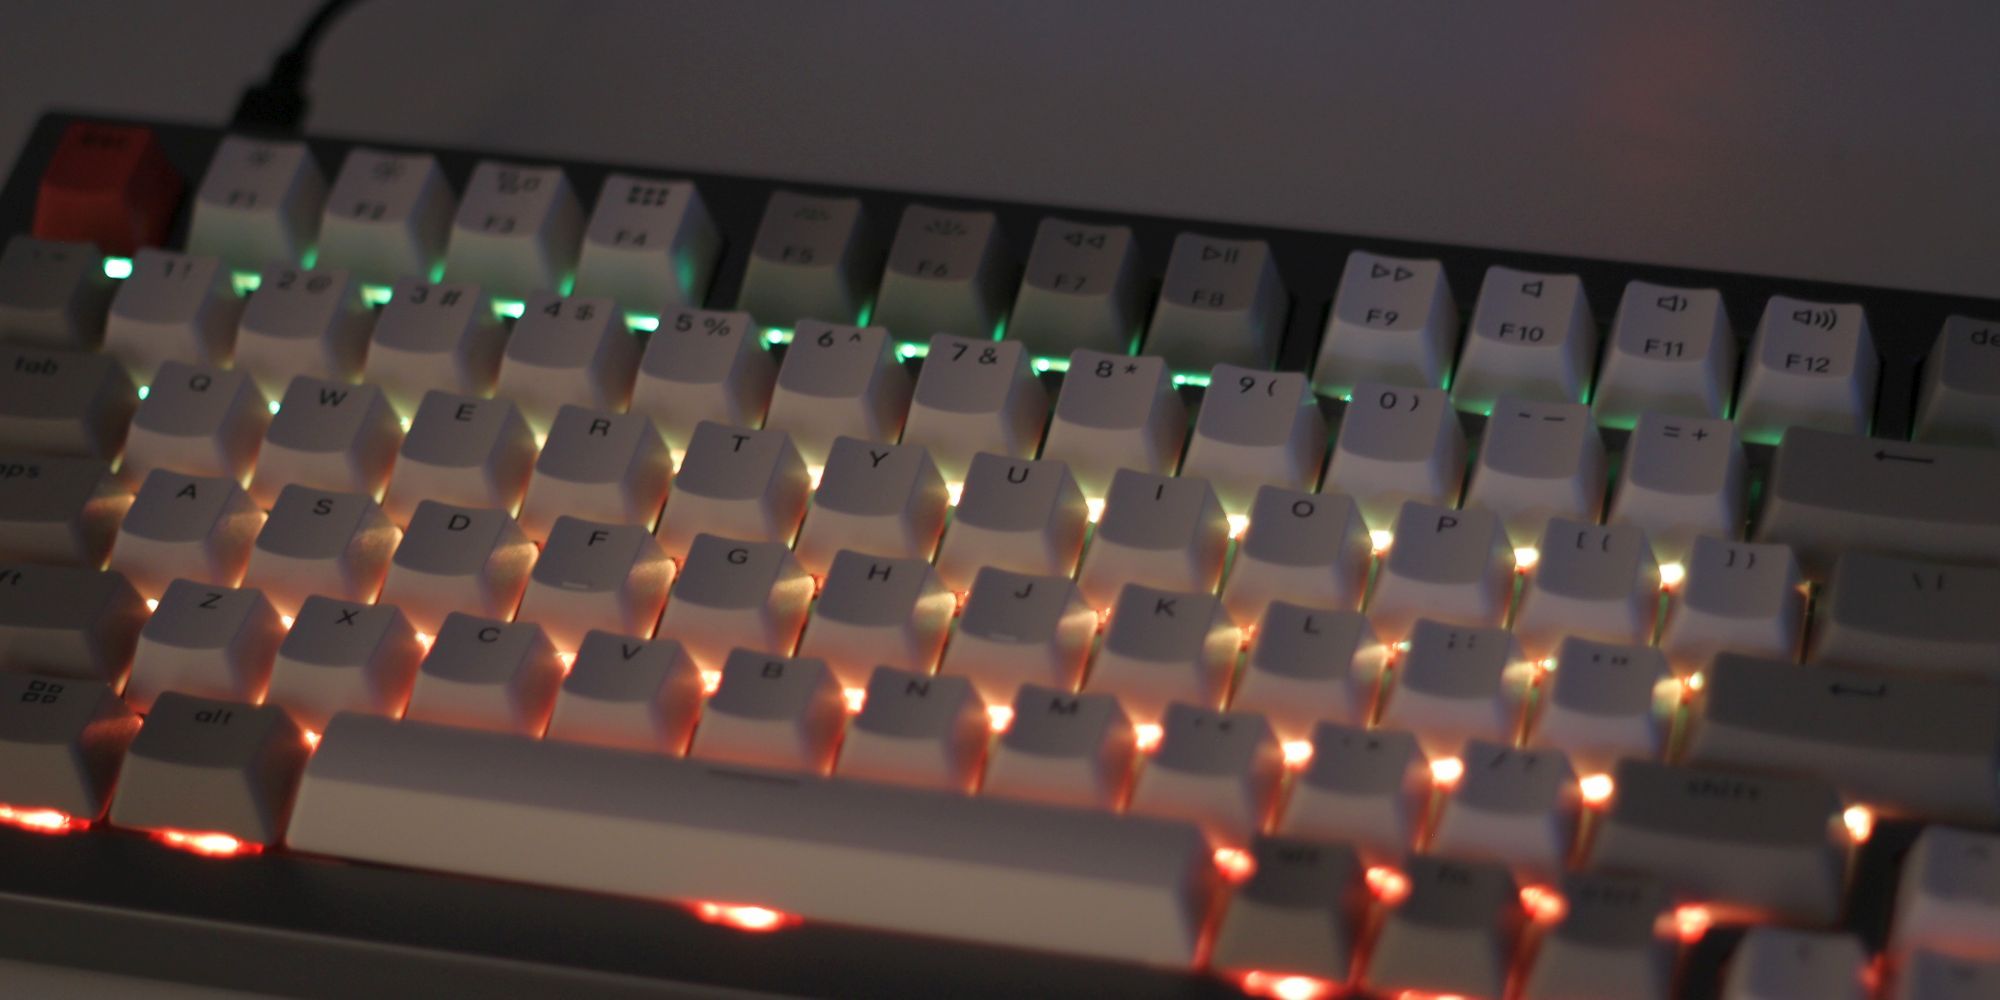 keychron-q1-mechanical-keyboard-review-backlighting-05